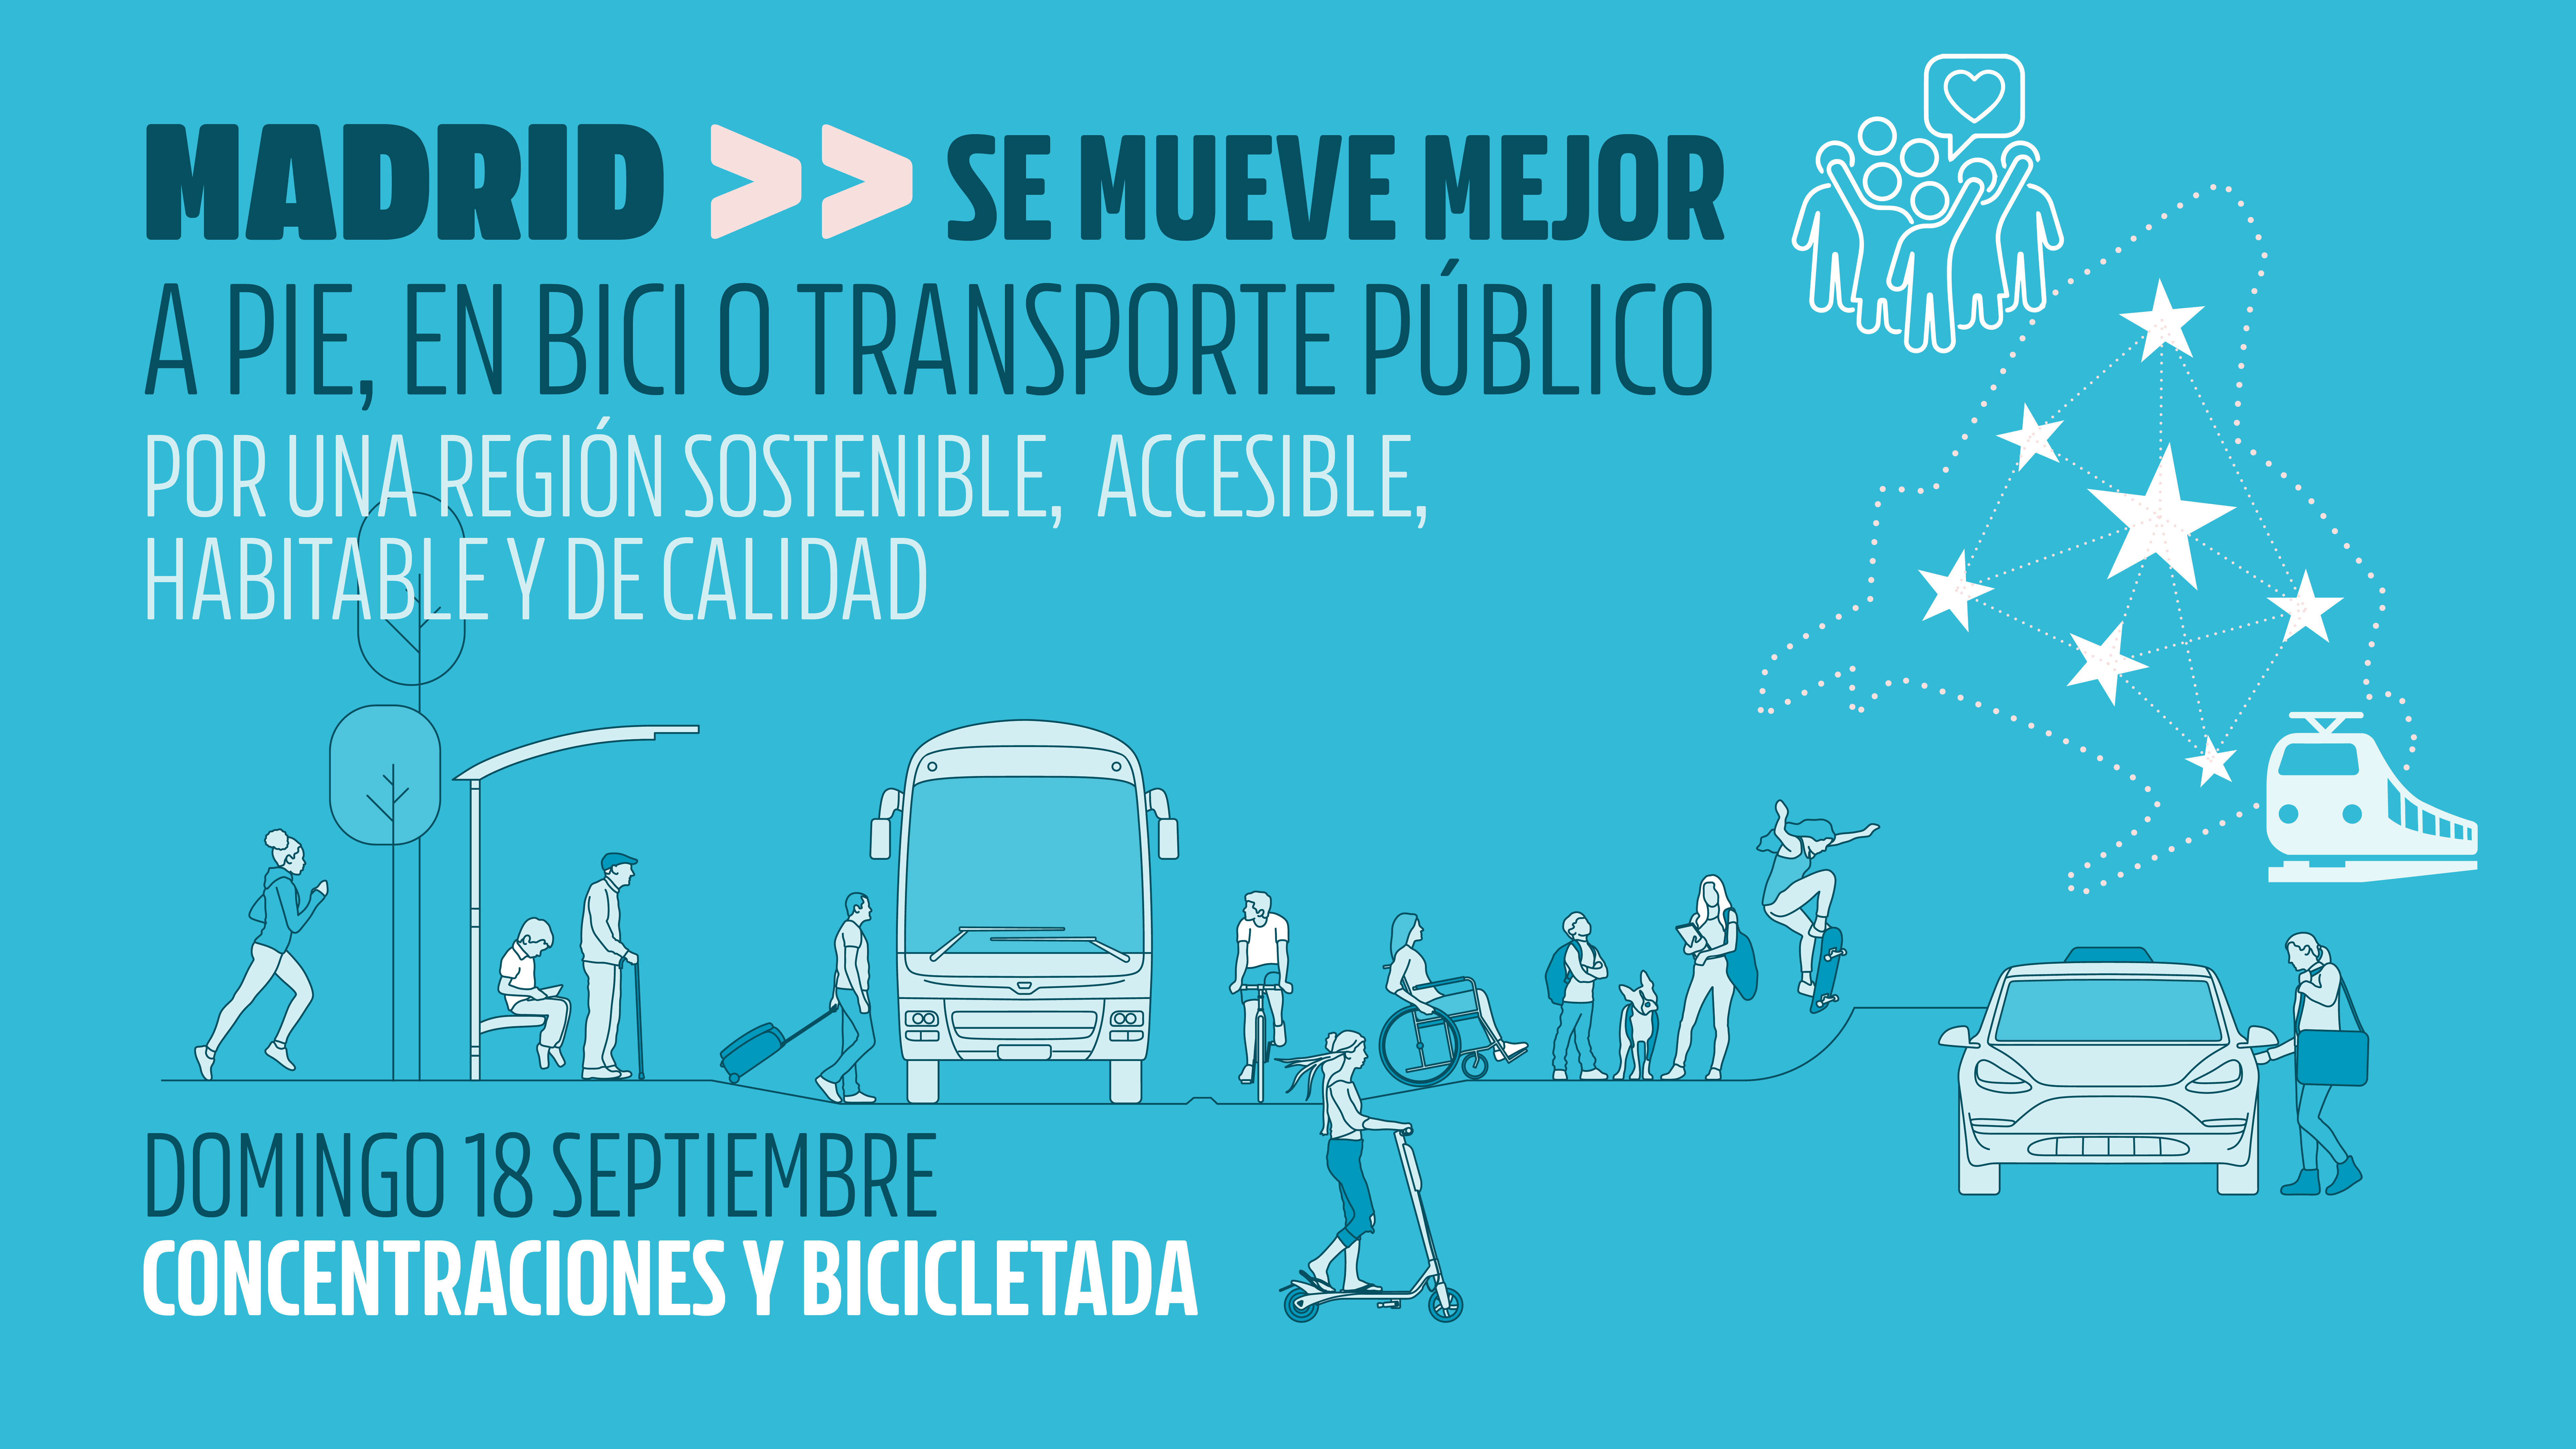 Madrid se mueve mejor: a pie, en bici o transporte público